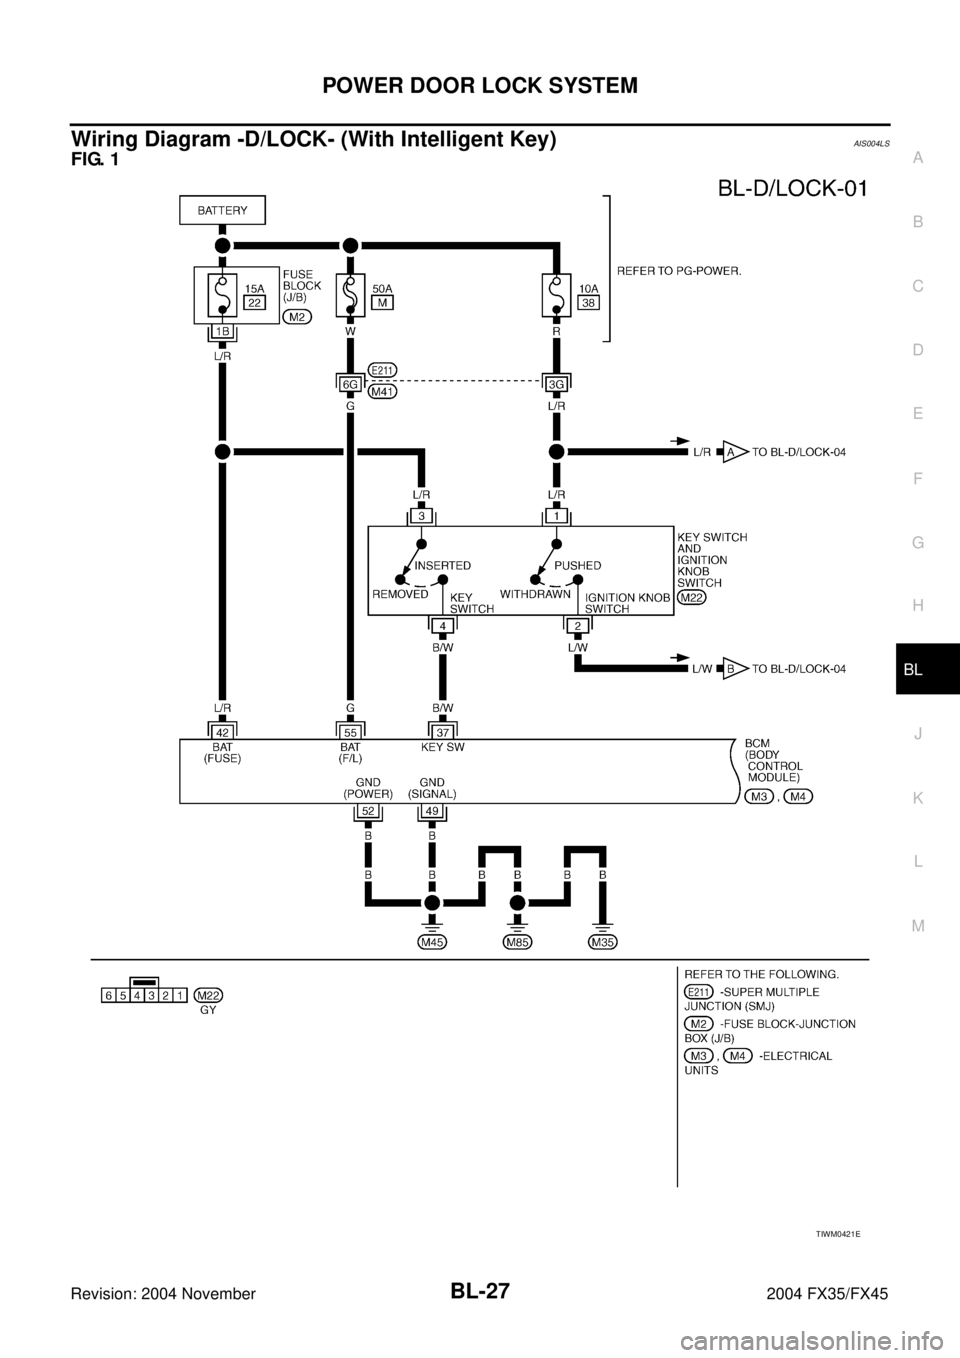 INFINITI FX35 2004  Service Manual POWER DOOR LOCK SYSTEM
BL-27
C
D
E
F
G
H
J
K
L
MA
B
BL
Revision: 2004 November 2004 FX35/FX45
Wiring Diagram -D/LOCK- (With Intelligent Key)AIS004LS
FIG. 1
TIWM0421E 